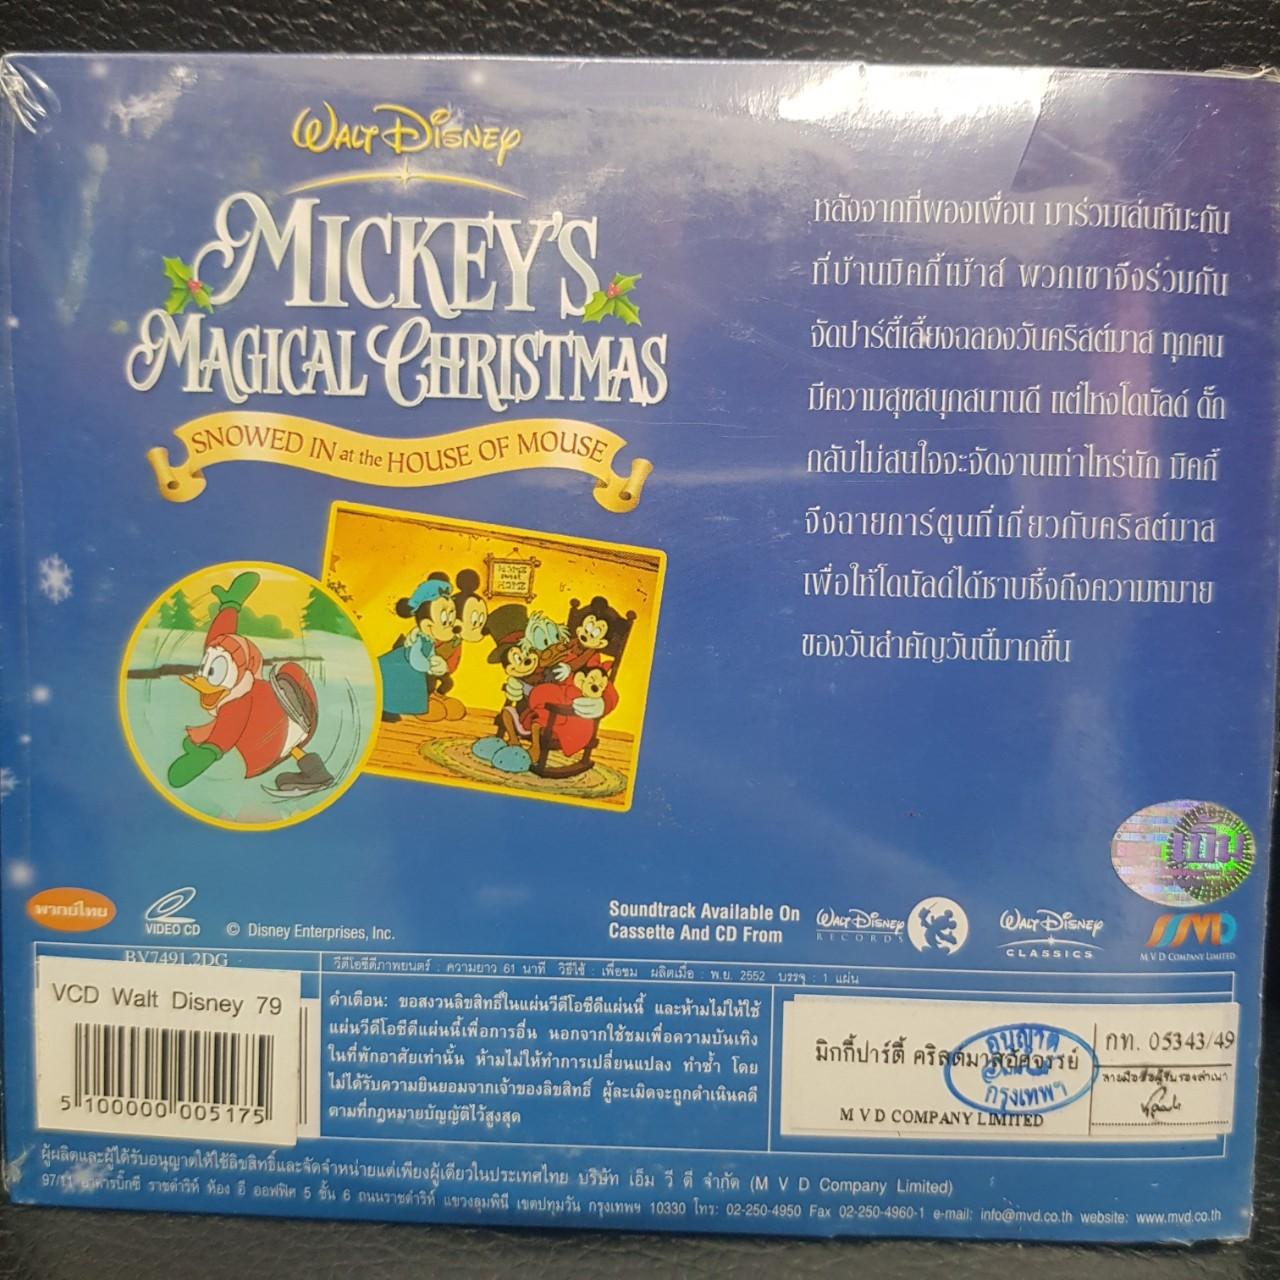 Vcdหน ง ม กก ปาร ต คร สต มาสอ ศจรรย Mickey S Magical Christmas ฉบ บ พากย ไทย Mvdvcd190 ม กก ปาร ต คร สต มาสอ ศจรรย Mickey Smagicalchristmas Cartoon การ ต น ด สน ย Disney Mvd หน ง ภาพยนตร ด หน ง ด ว โอซ ด ว ซ ด Vcd มาสเตอร แท Starmart